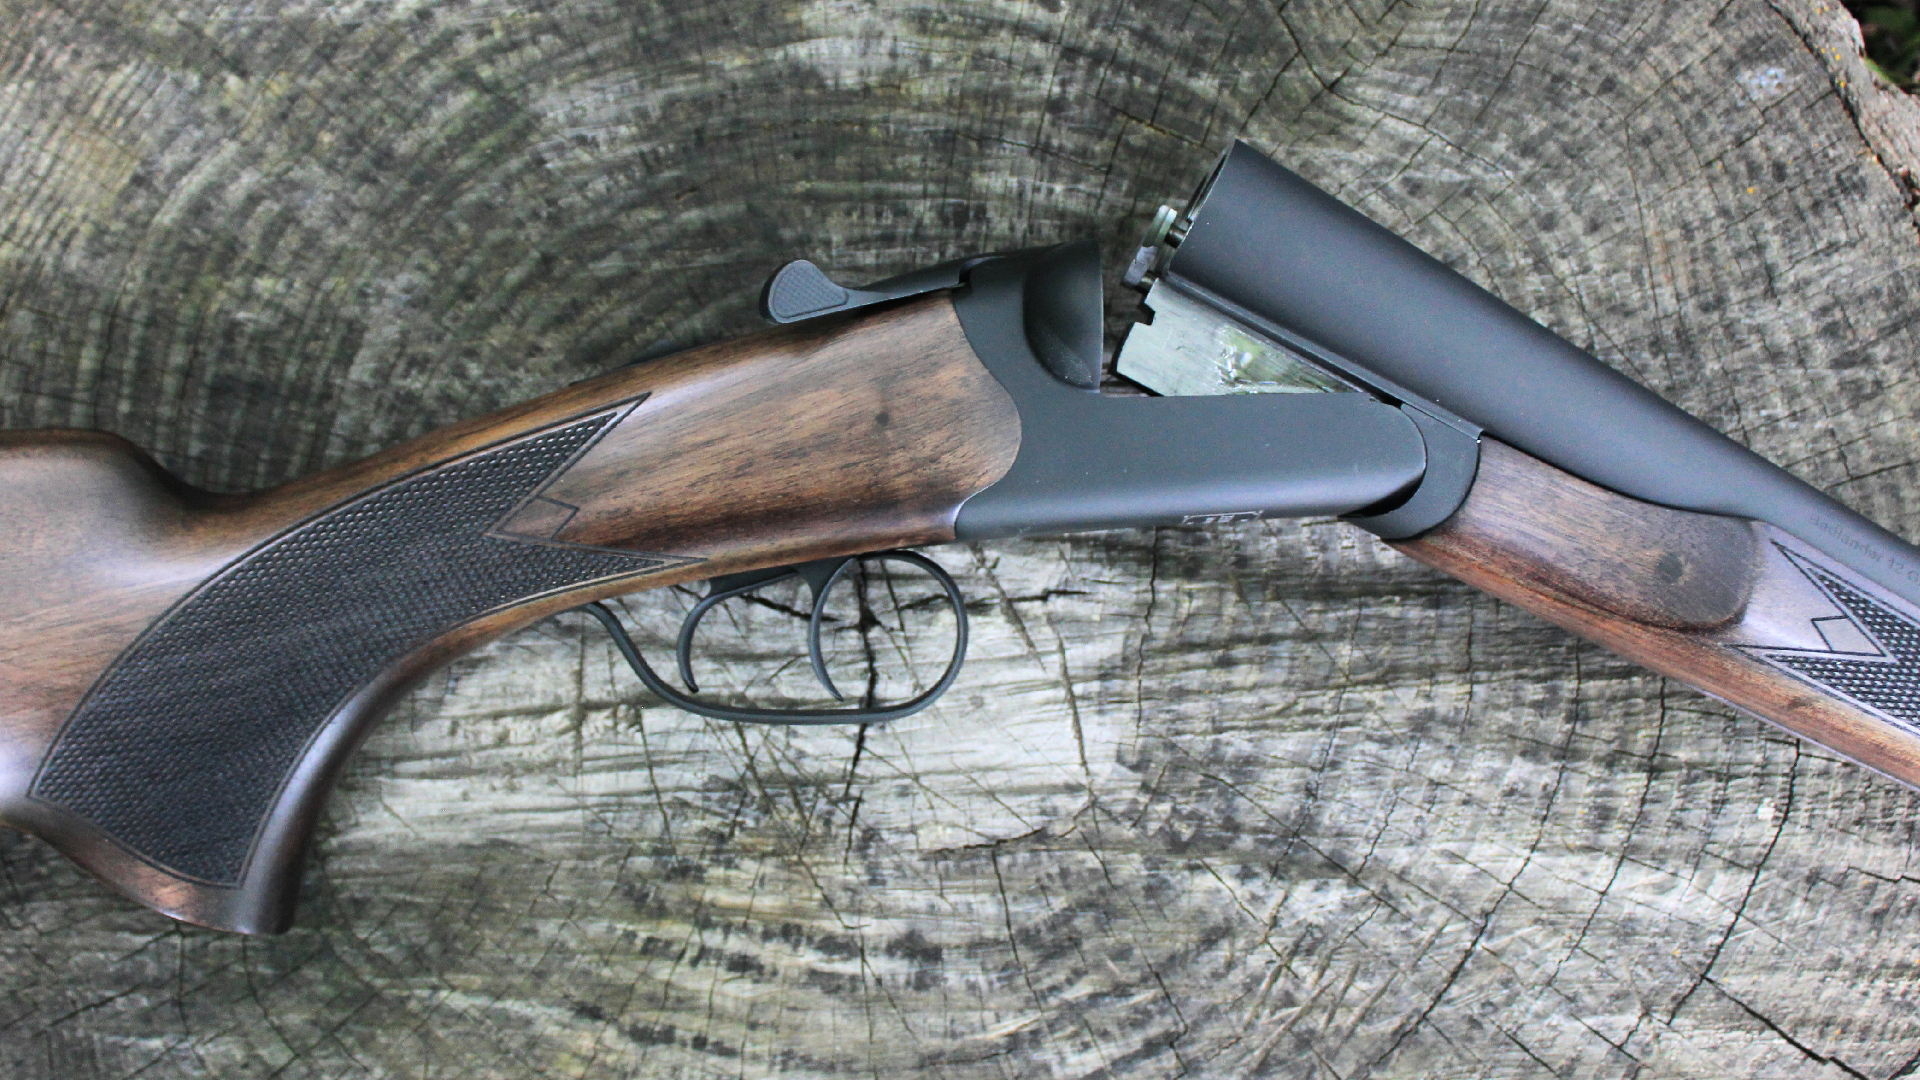 Heritage Badlander shotgun action open closeup shown resting on log outdoors